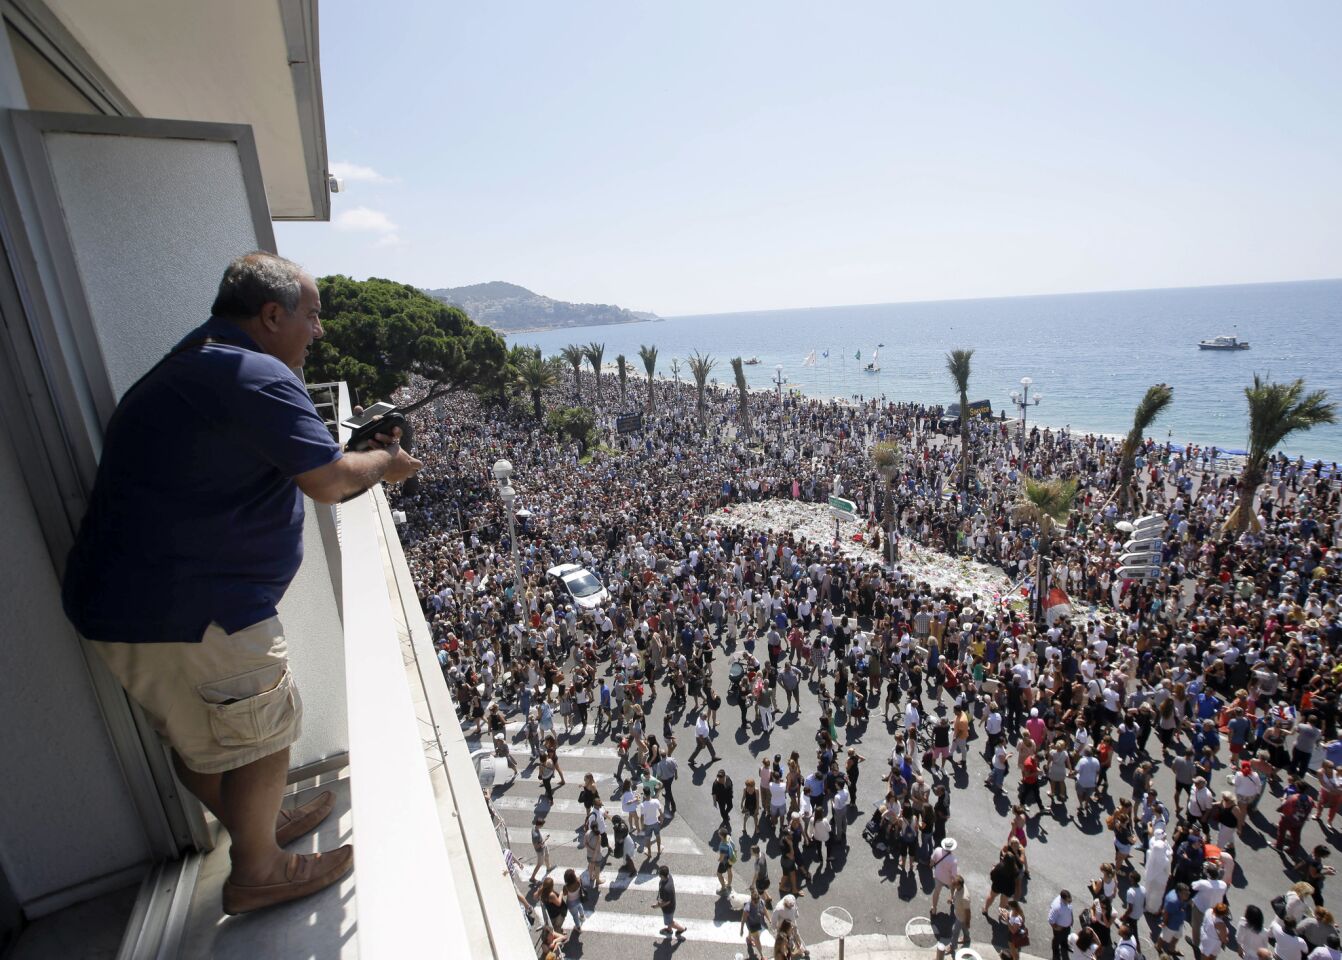 Terrorist attack in Nice, France